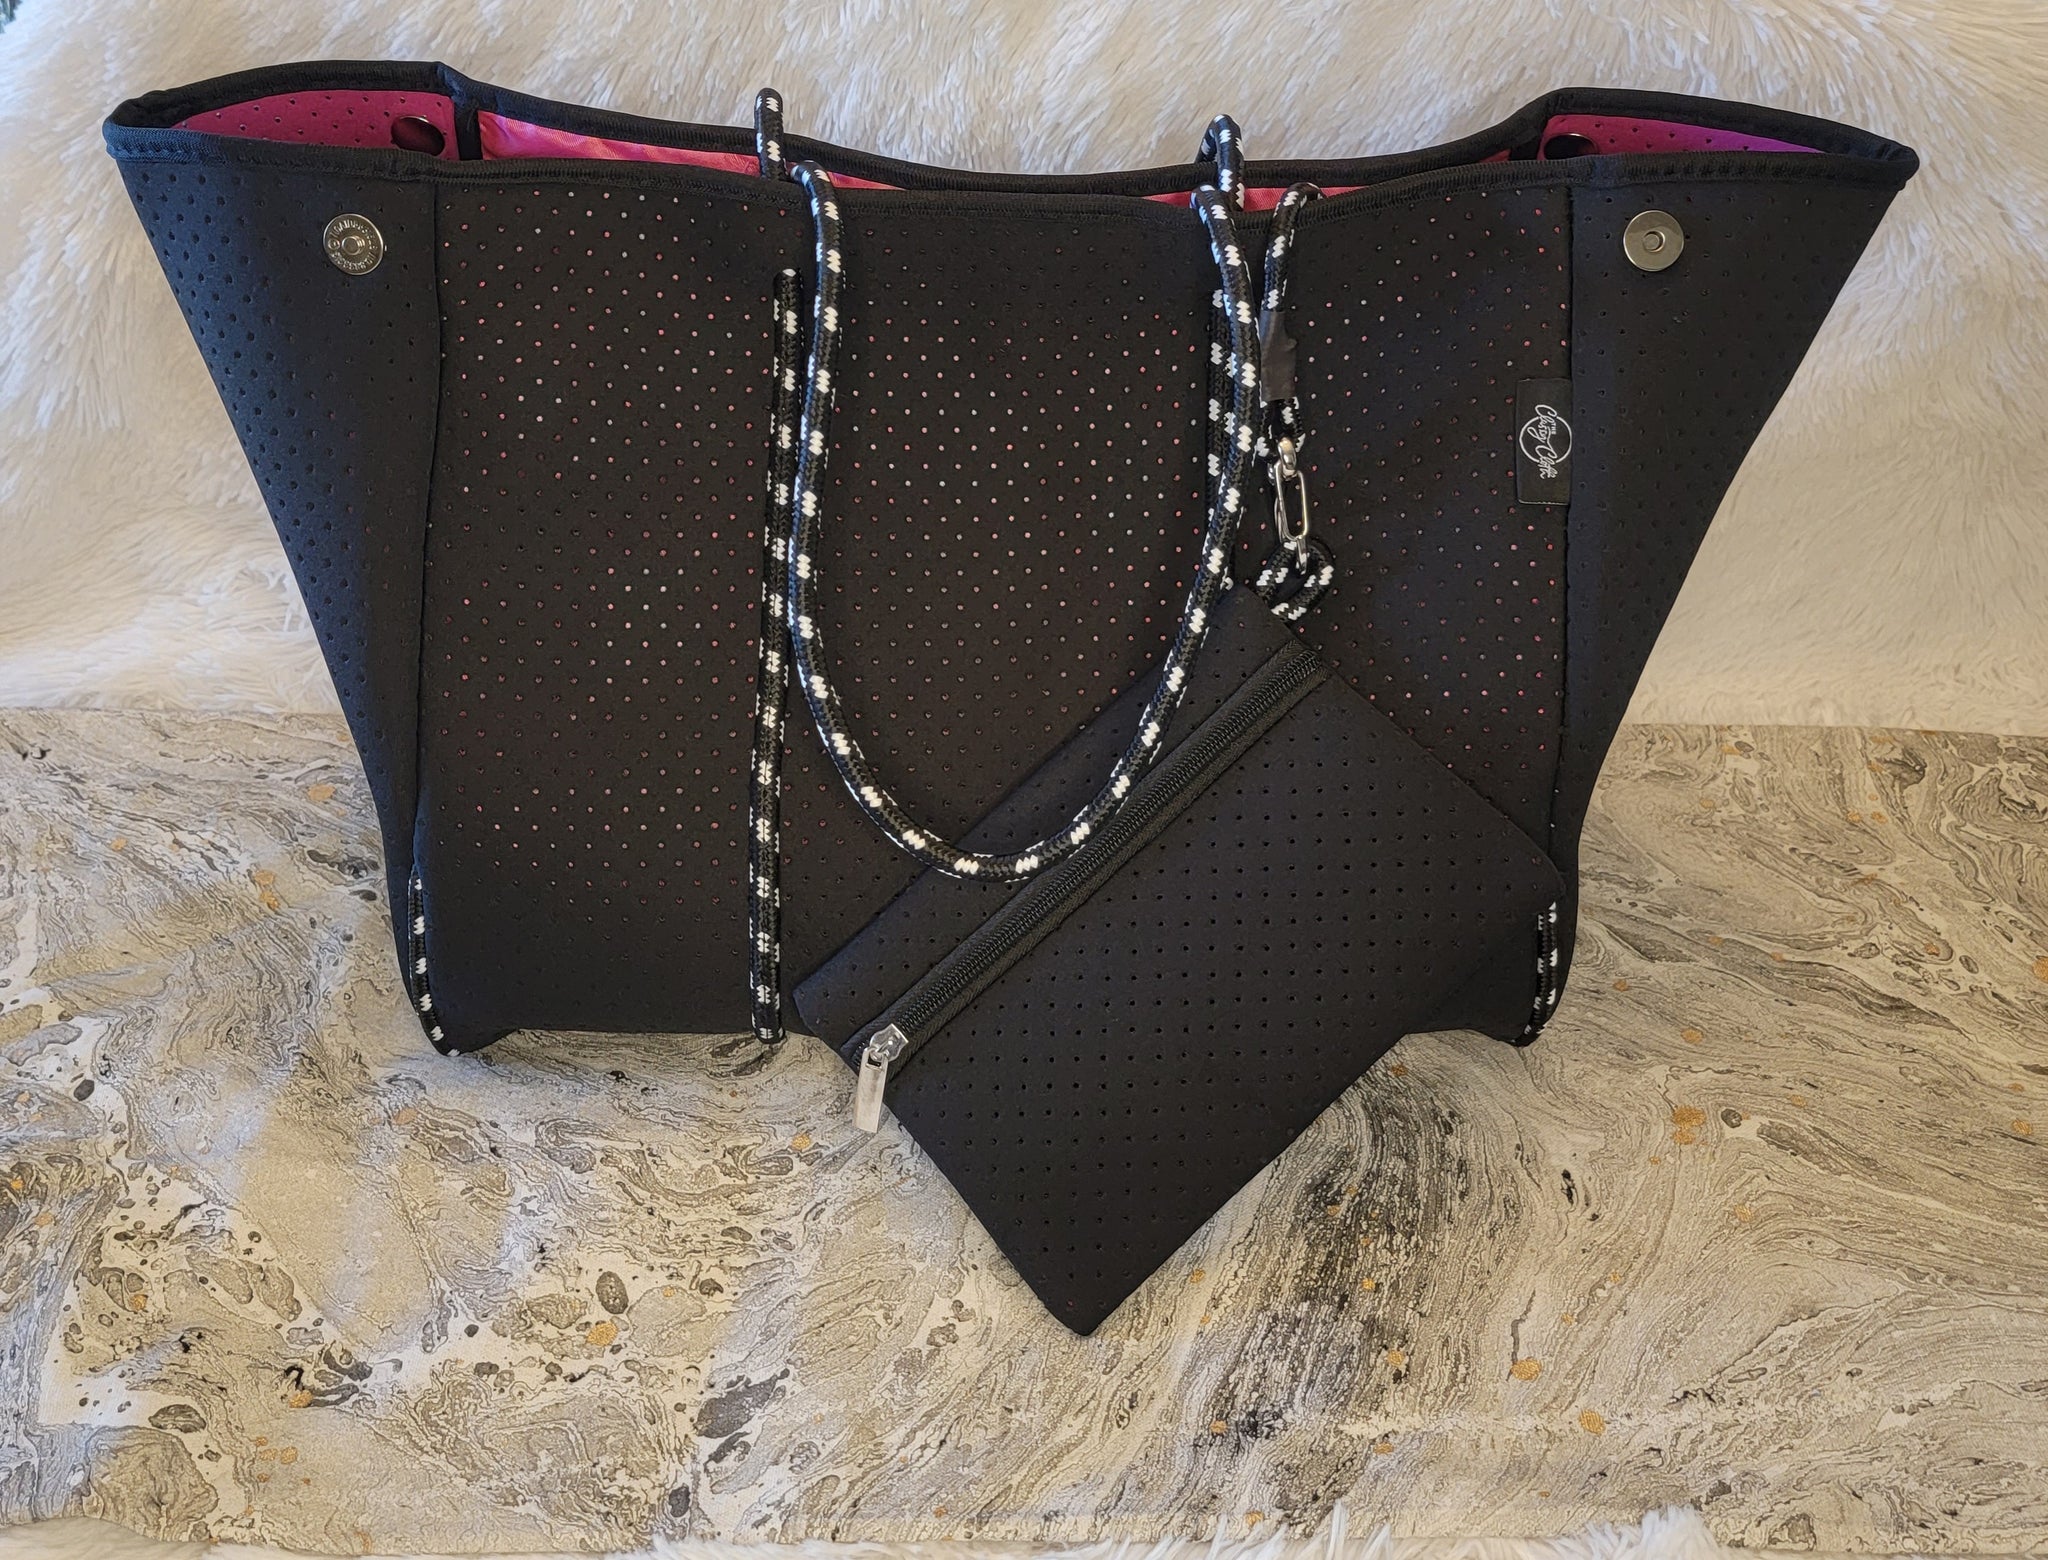 Neoprene Bag Solid Black w/ Pink Inside